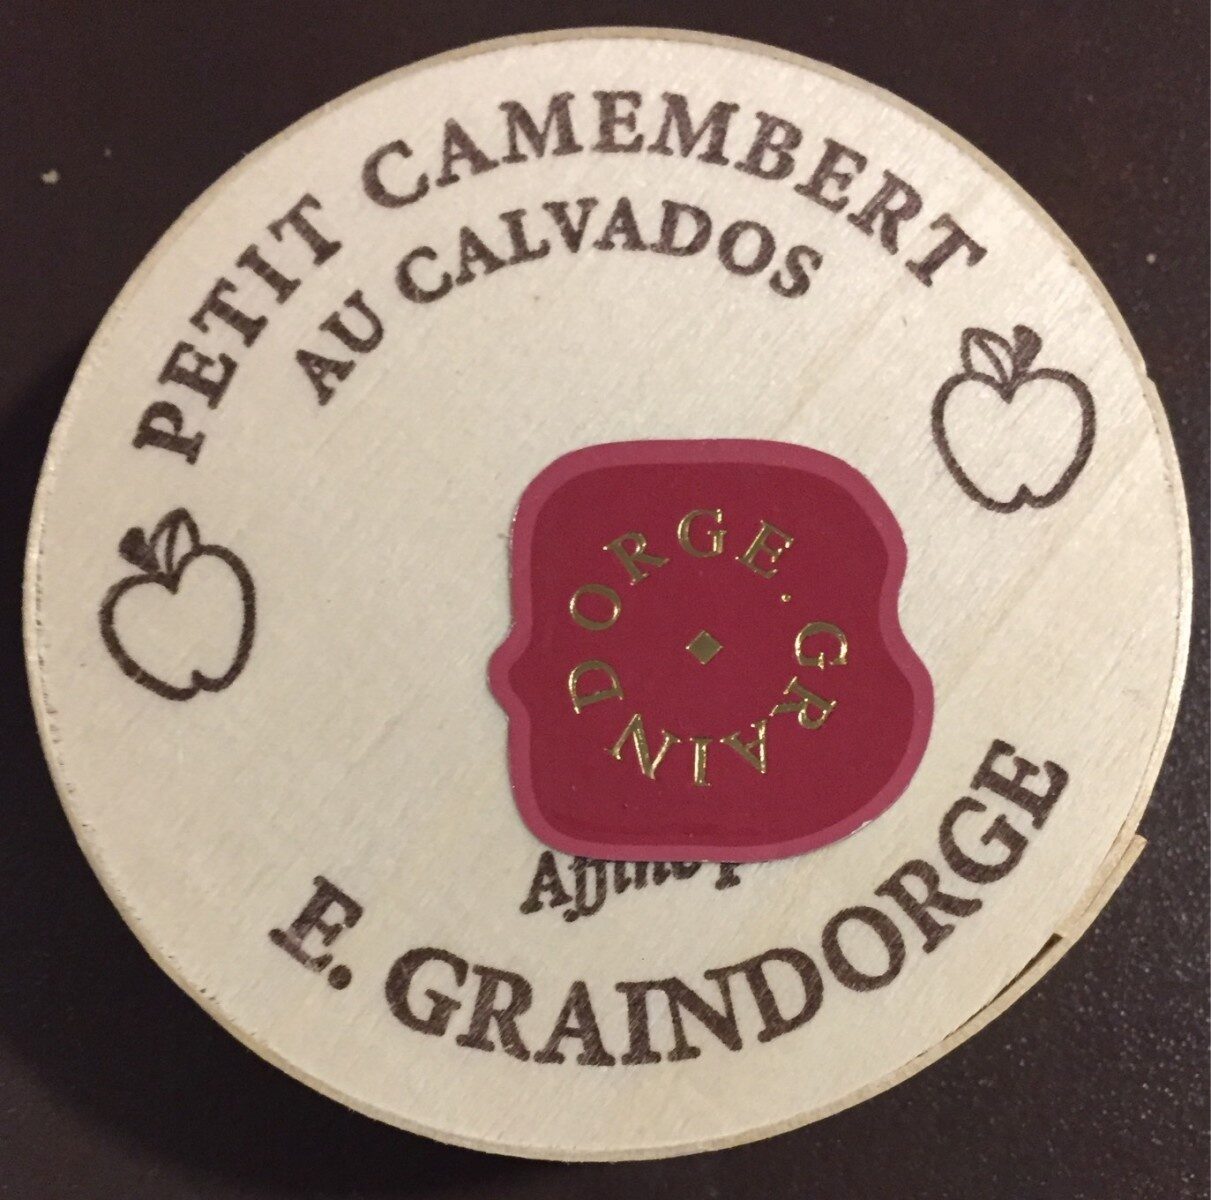 Petit camembert au Calvados - Product - es